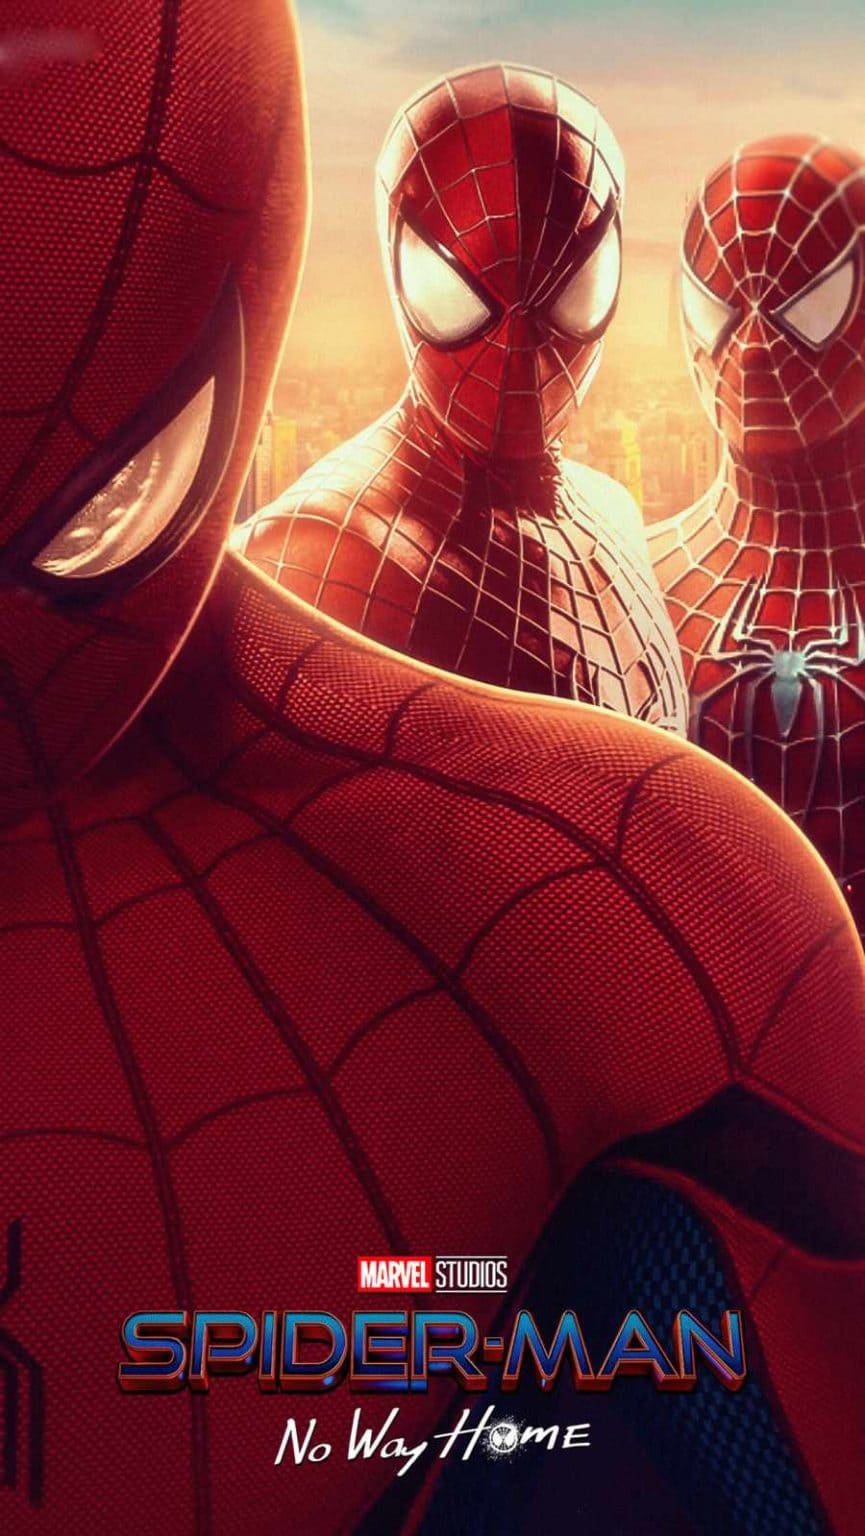 Multiverse Spiderman iphone 13 pro max wallpaper, Best iPhone Wallpaper and iPhone background, WallpaperUpdate, Best iPhone Wallpaper and iPhone background